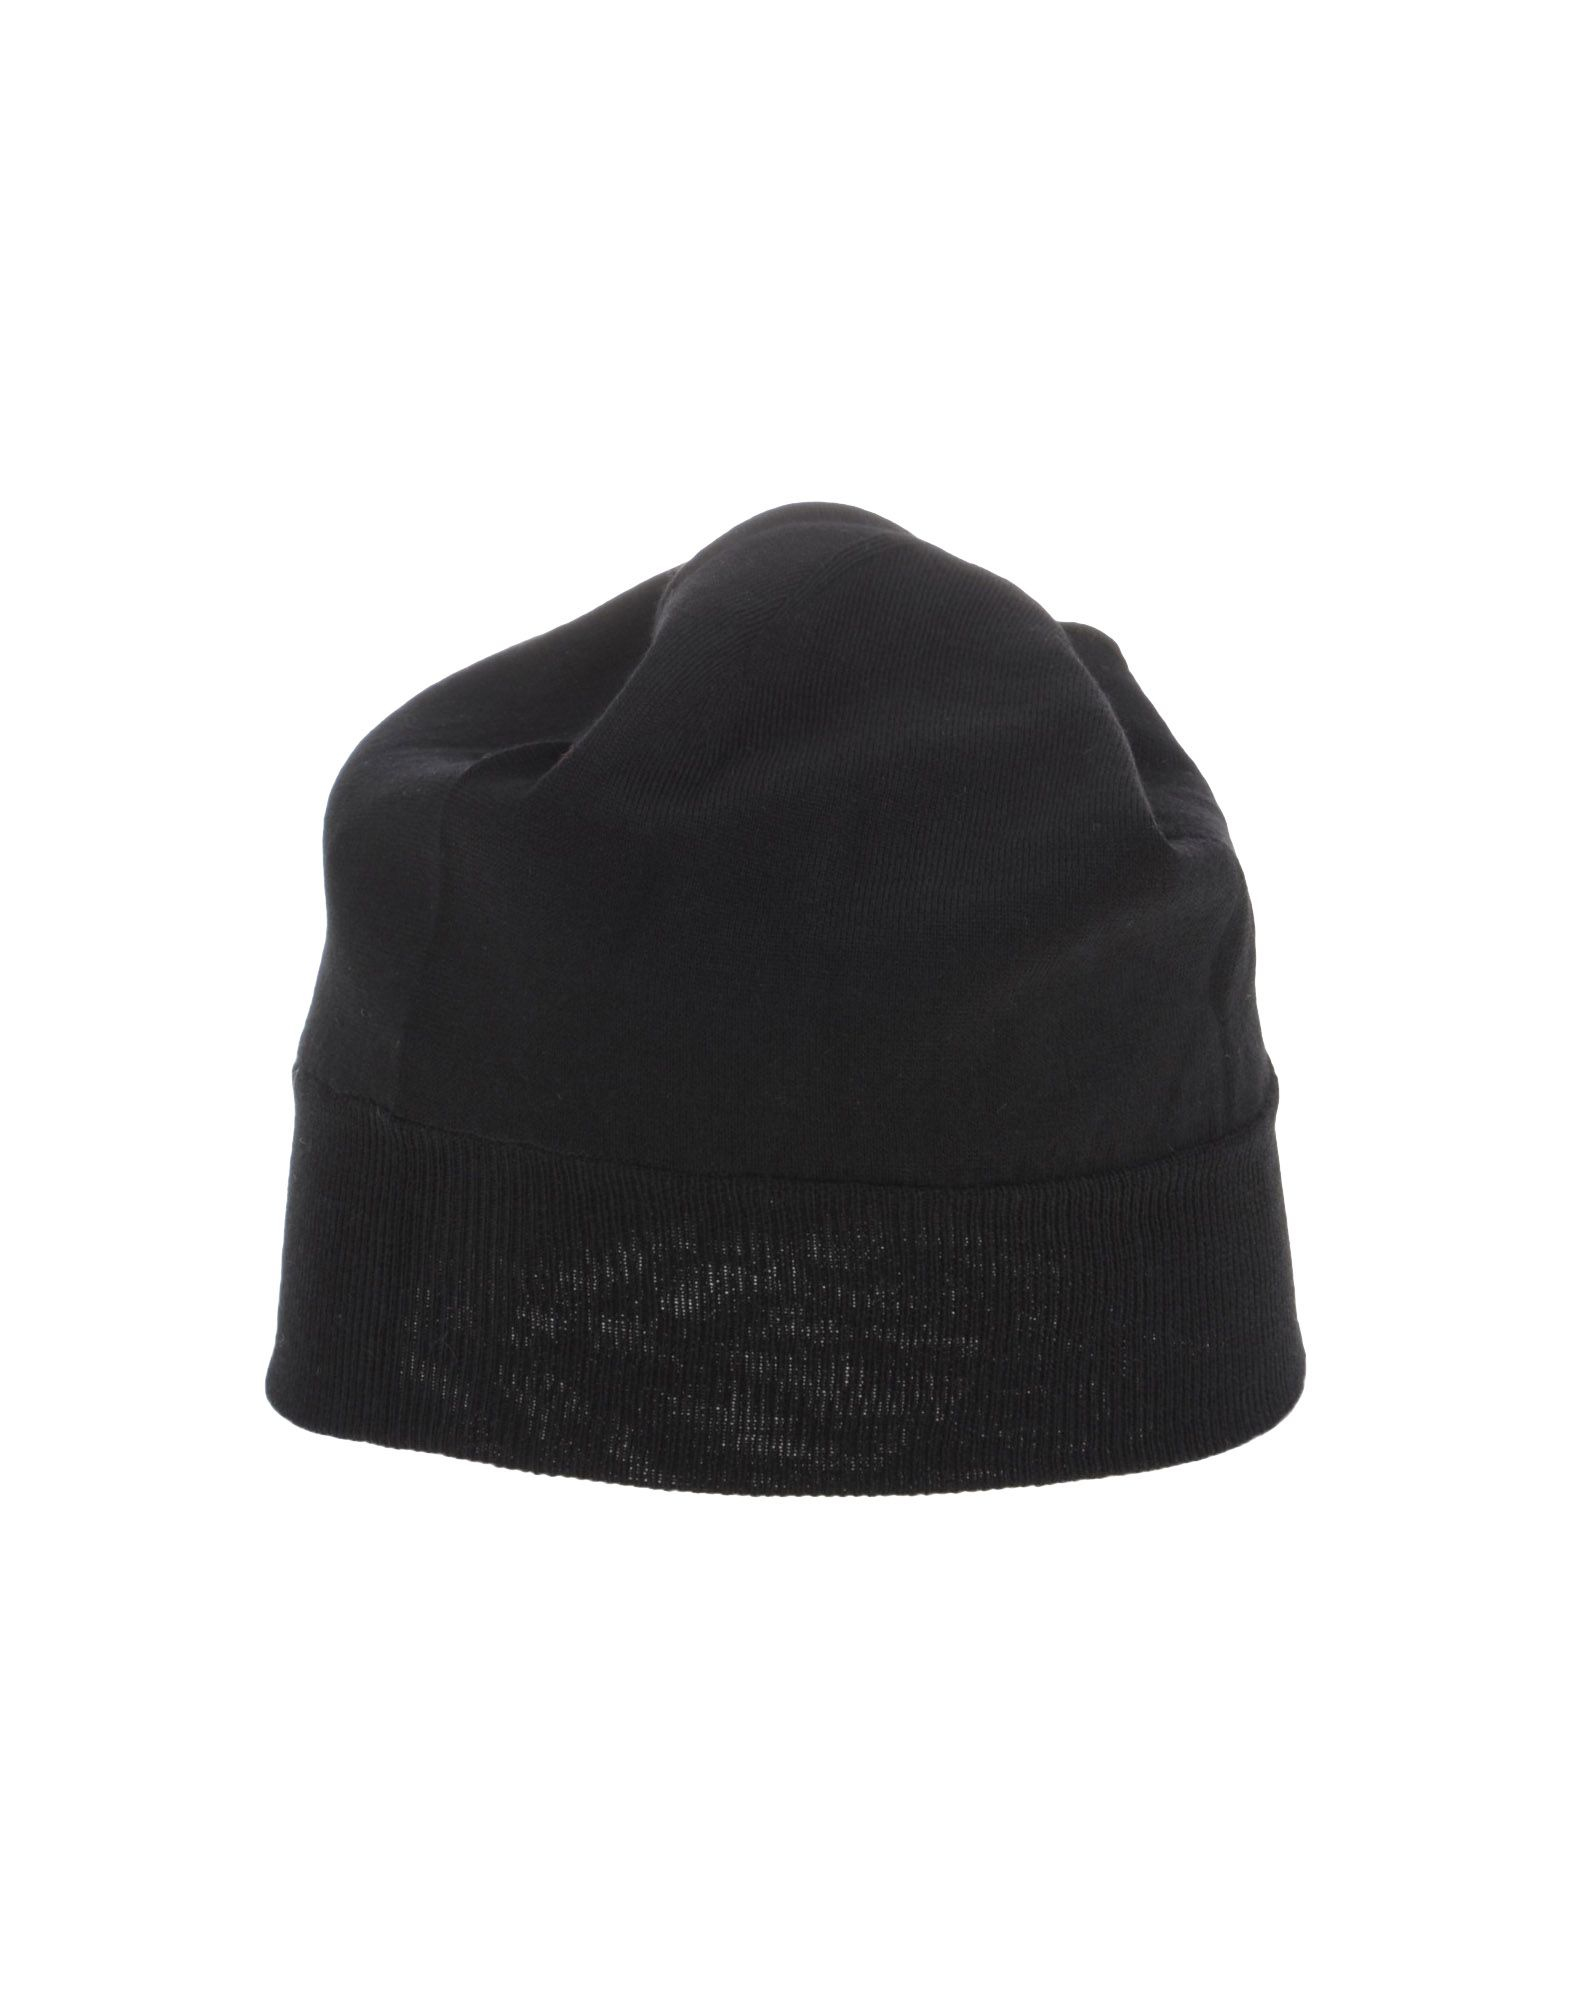 Dolce & gabbana Hat in Black | Lyst